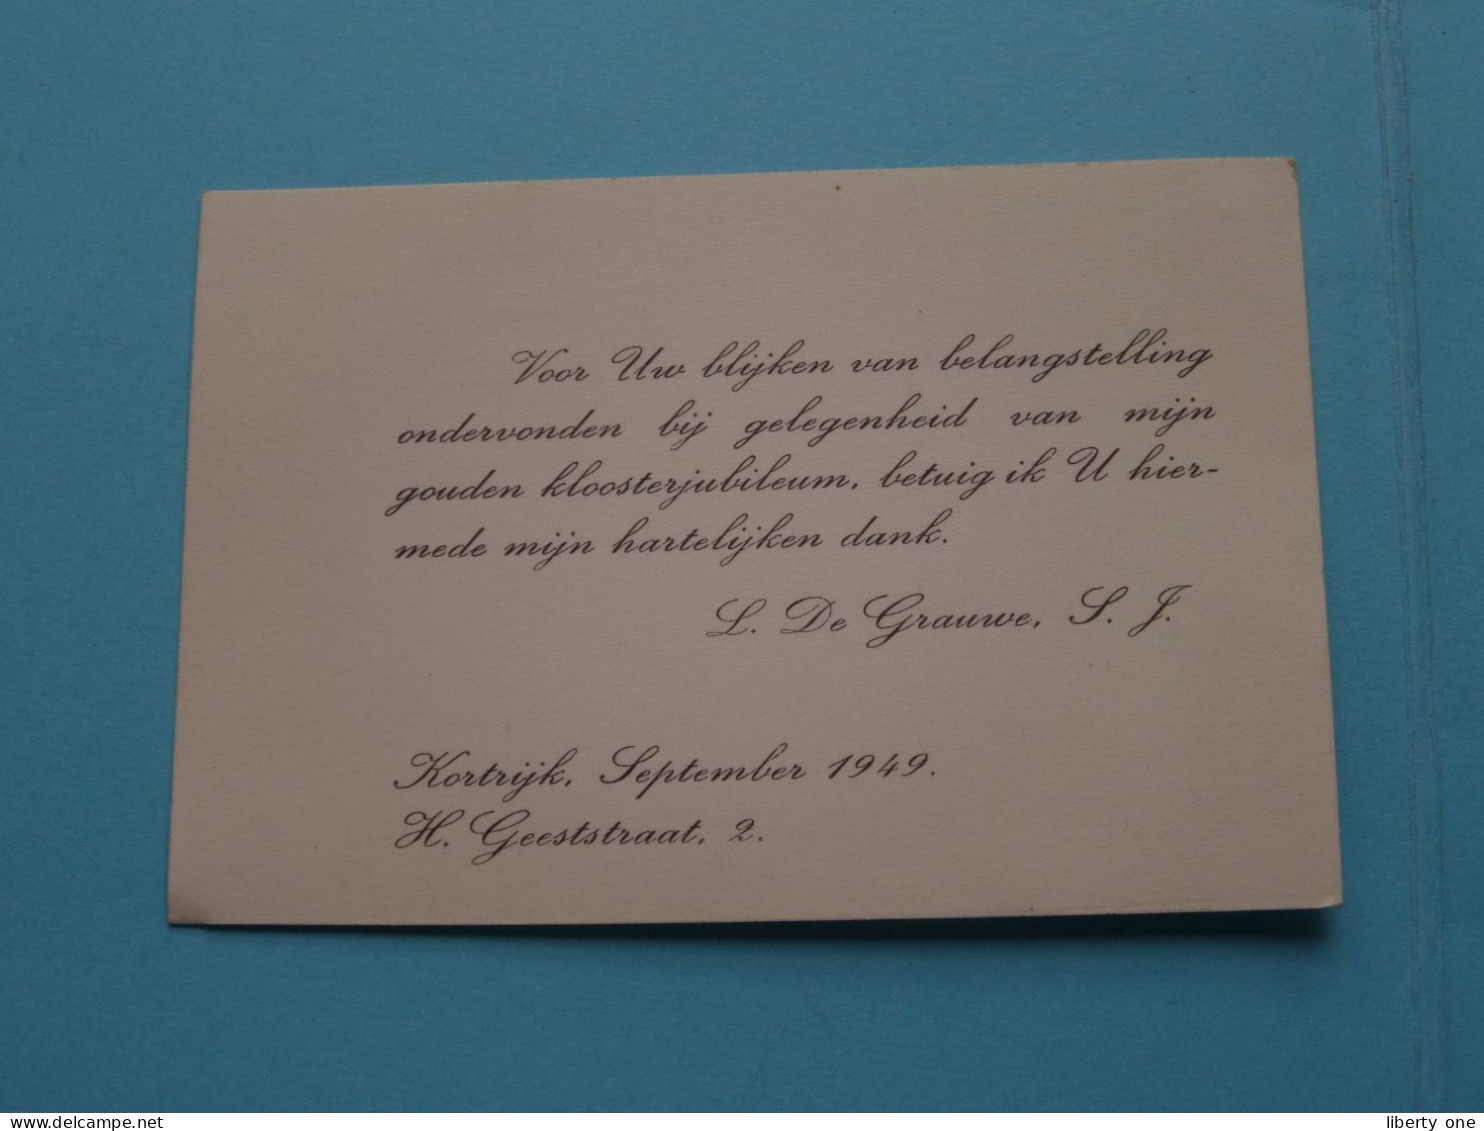 L. De GRAUWE ( Gouden Kloosterjubileum ) September 1949 ( H. Geeststraat 2 - Kortrijk ) ( Zie / Voir SCAN ) CDV ! - Visiting Cards